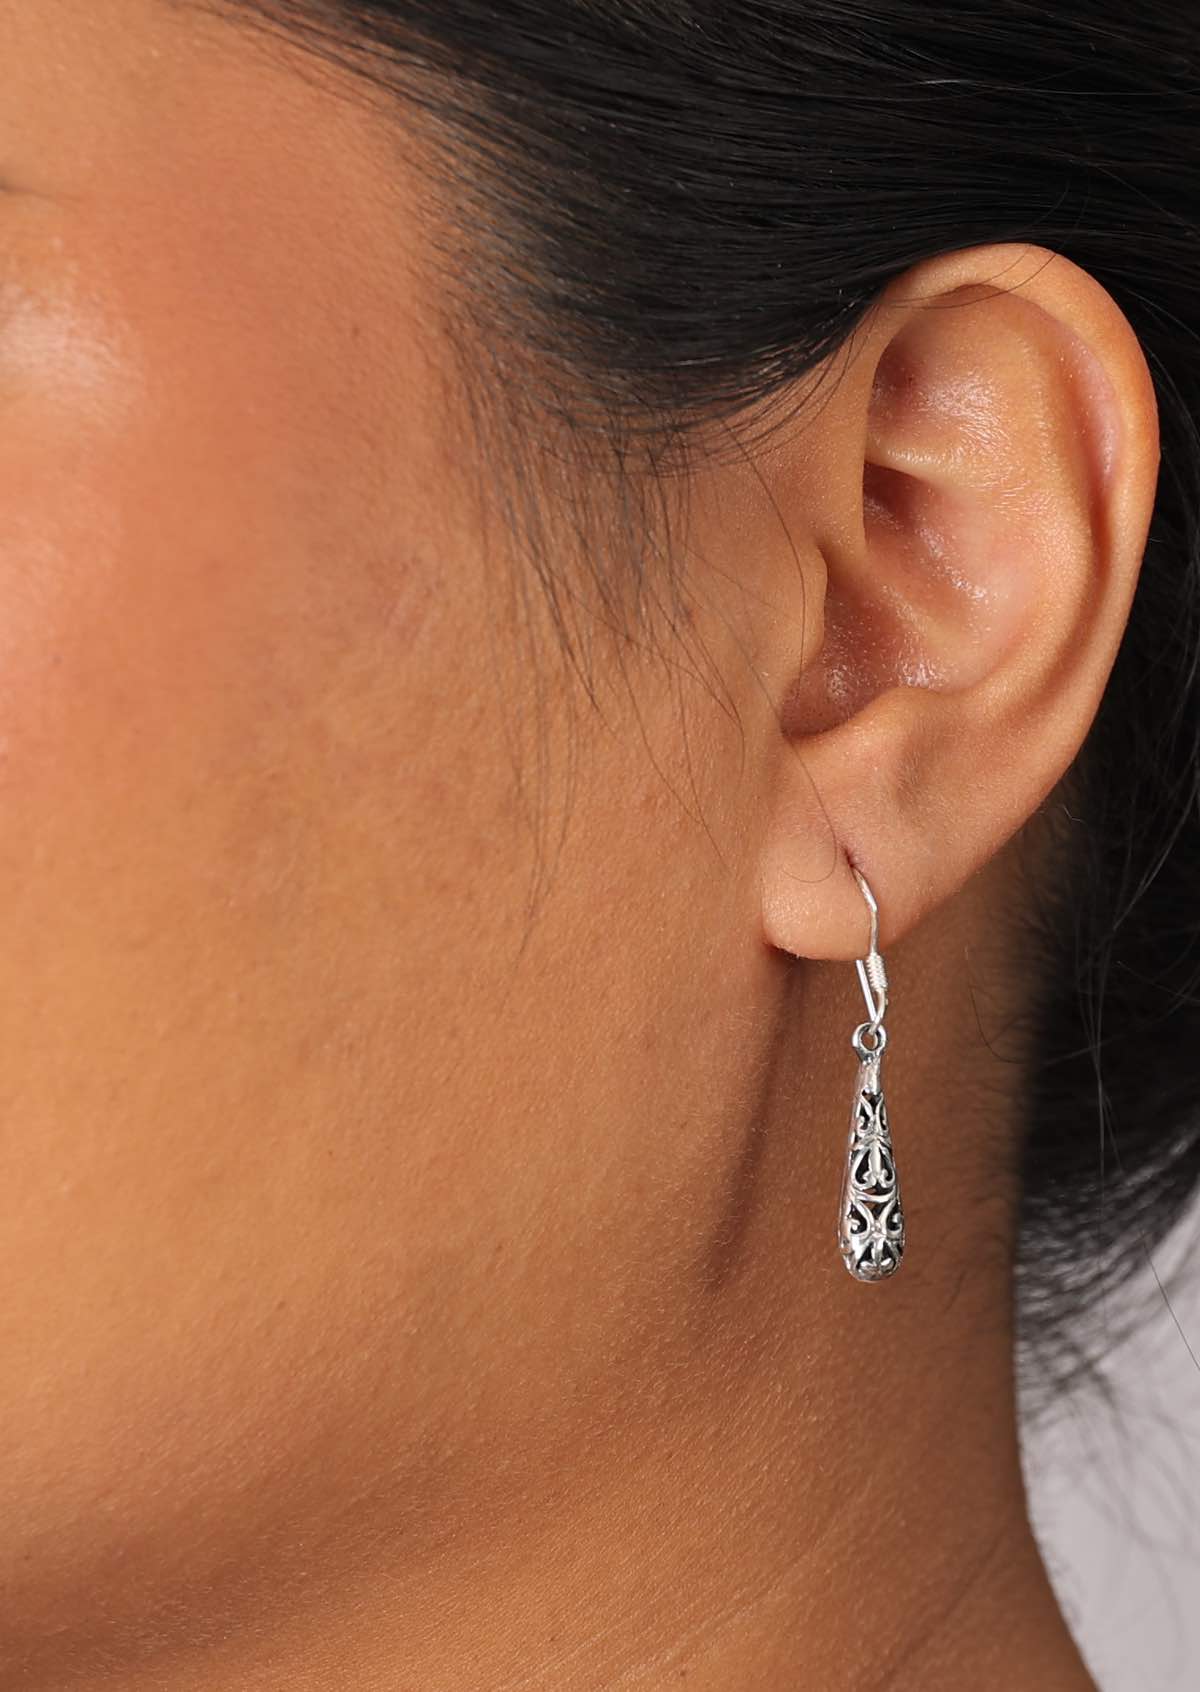 Teardrop shaped sterling silver earrings with ornate detail cutout